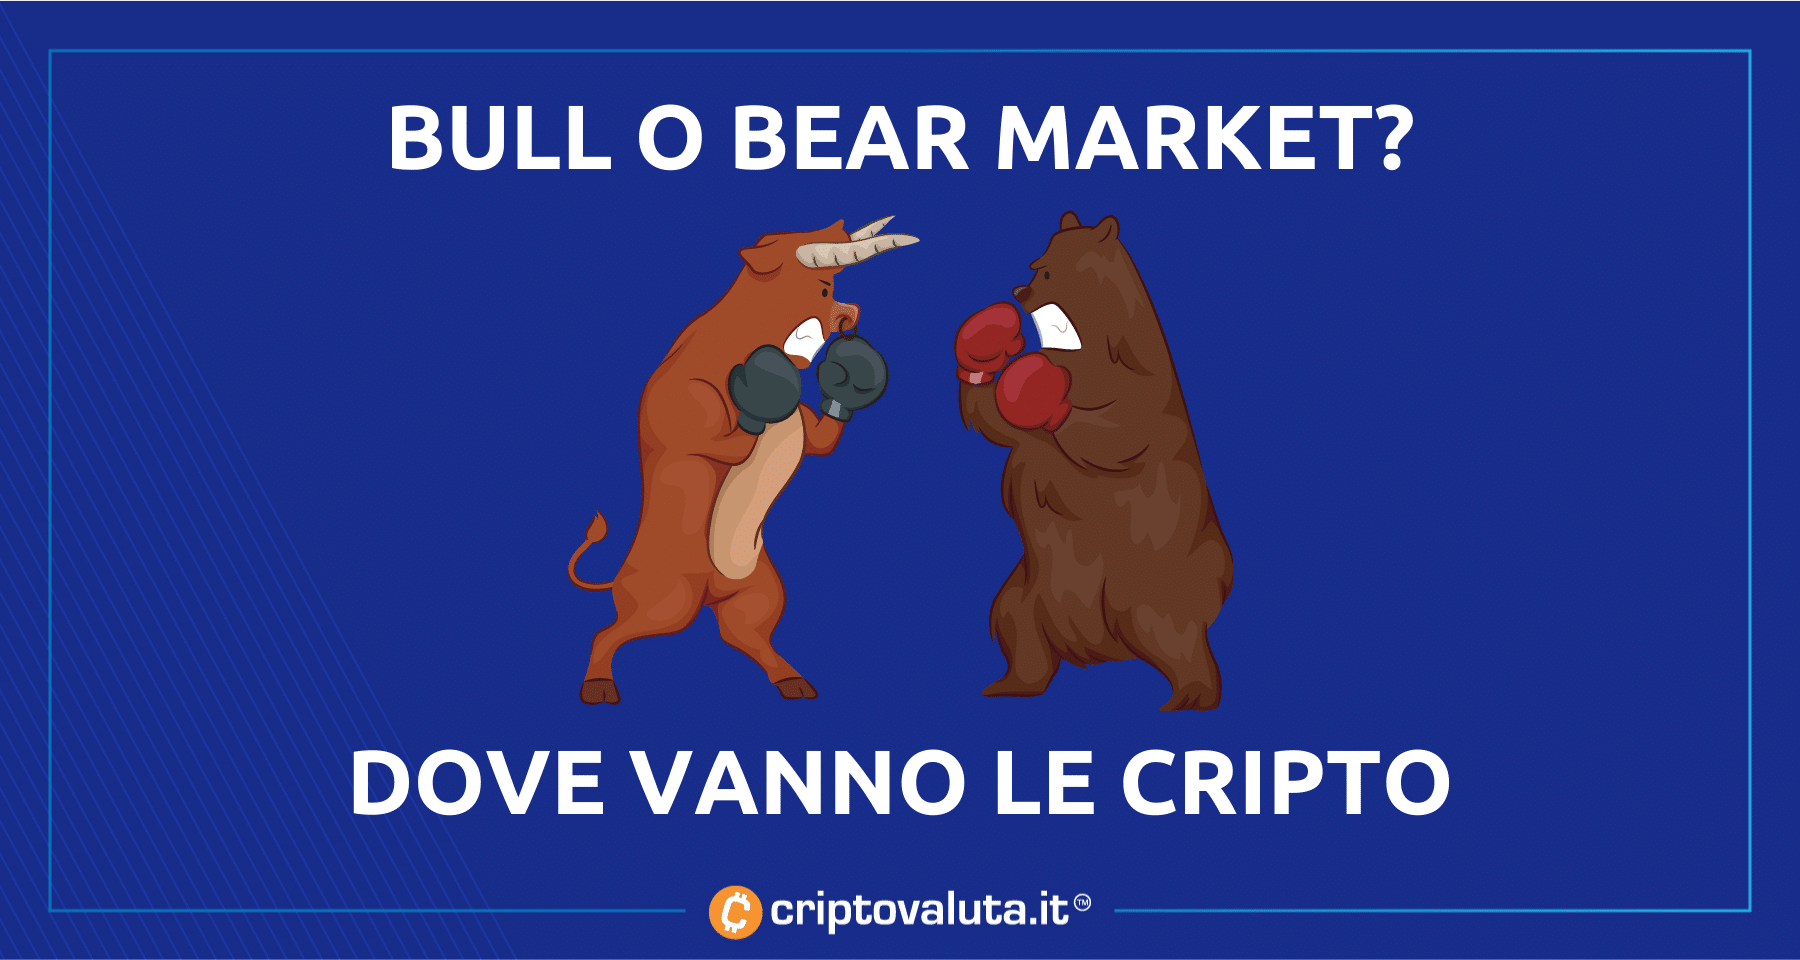 Bitcoin e crypto: bull o bear market? Analisi di Criptovaluta.it